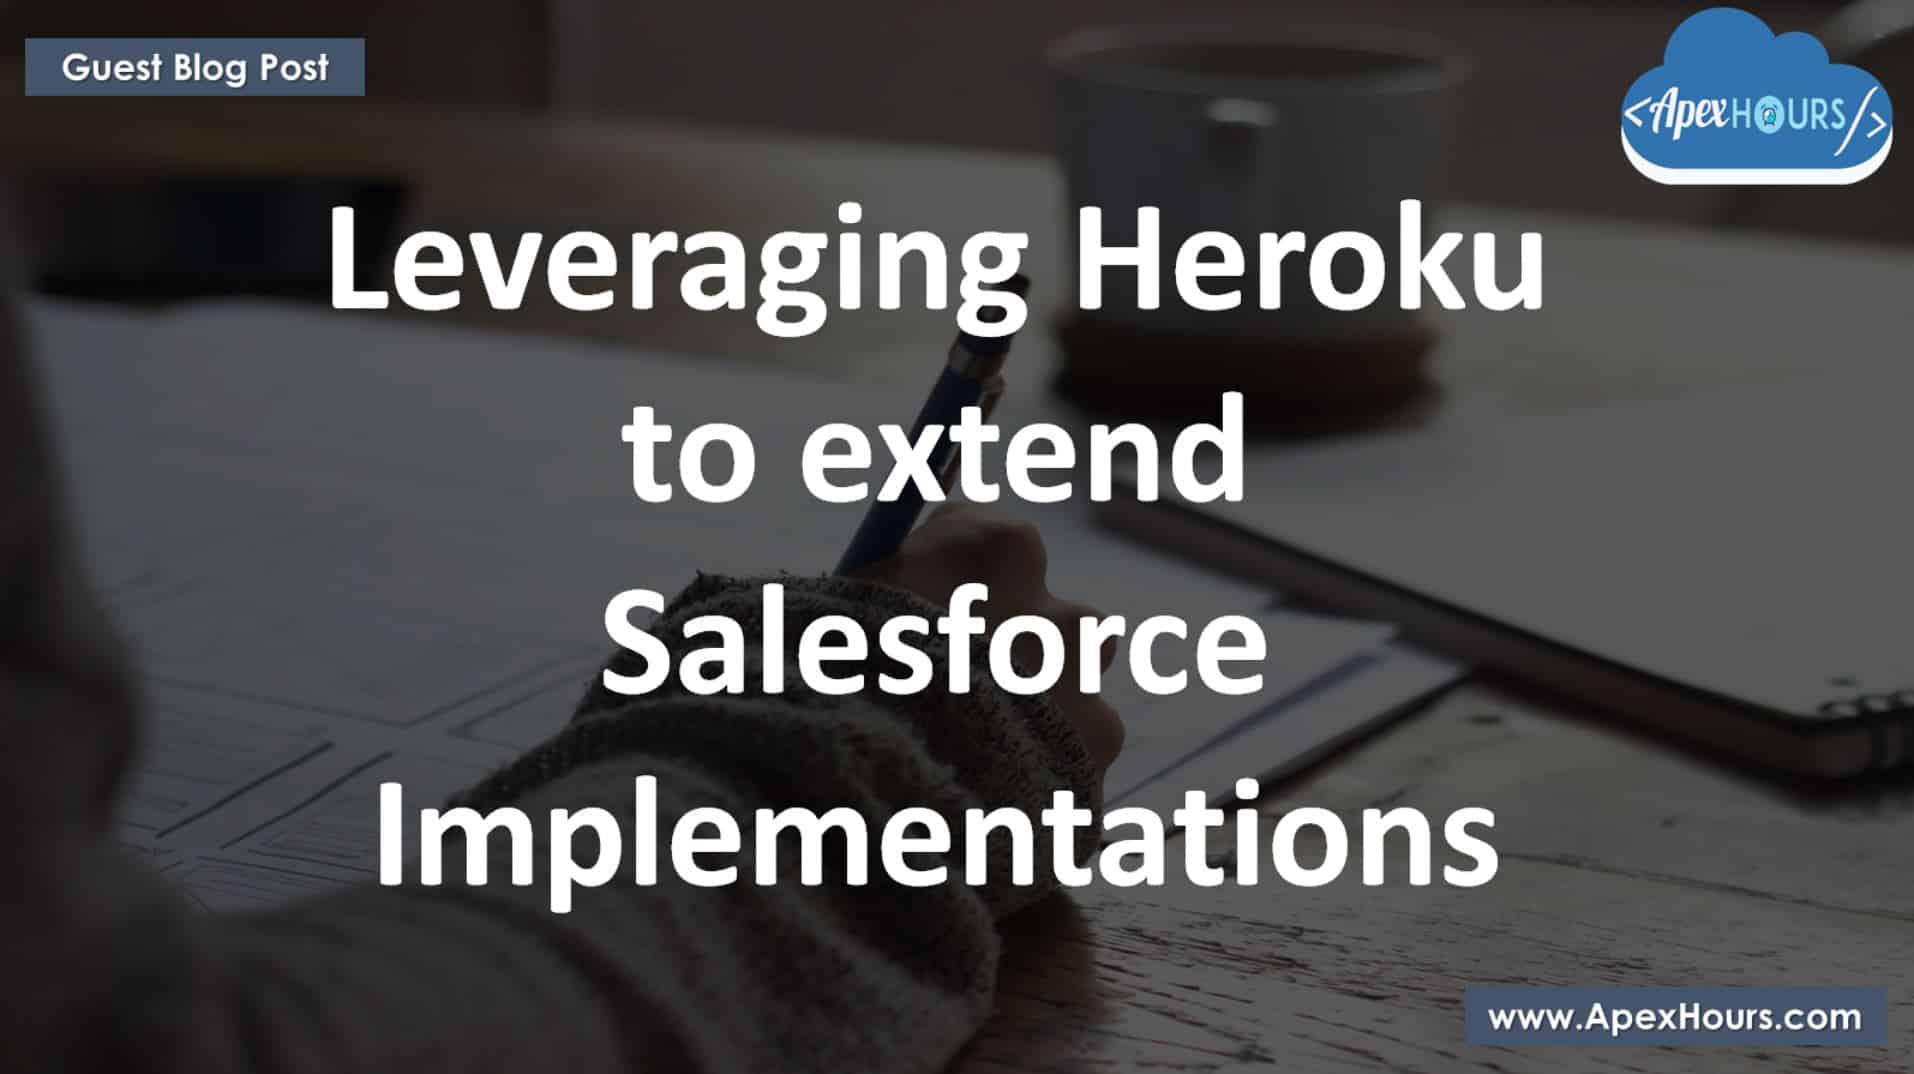 Heroku to extend Salesforce Implementations